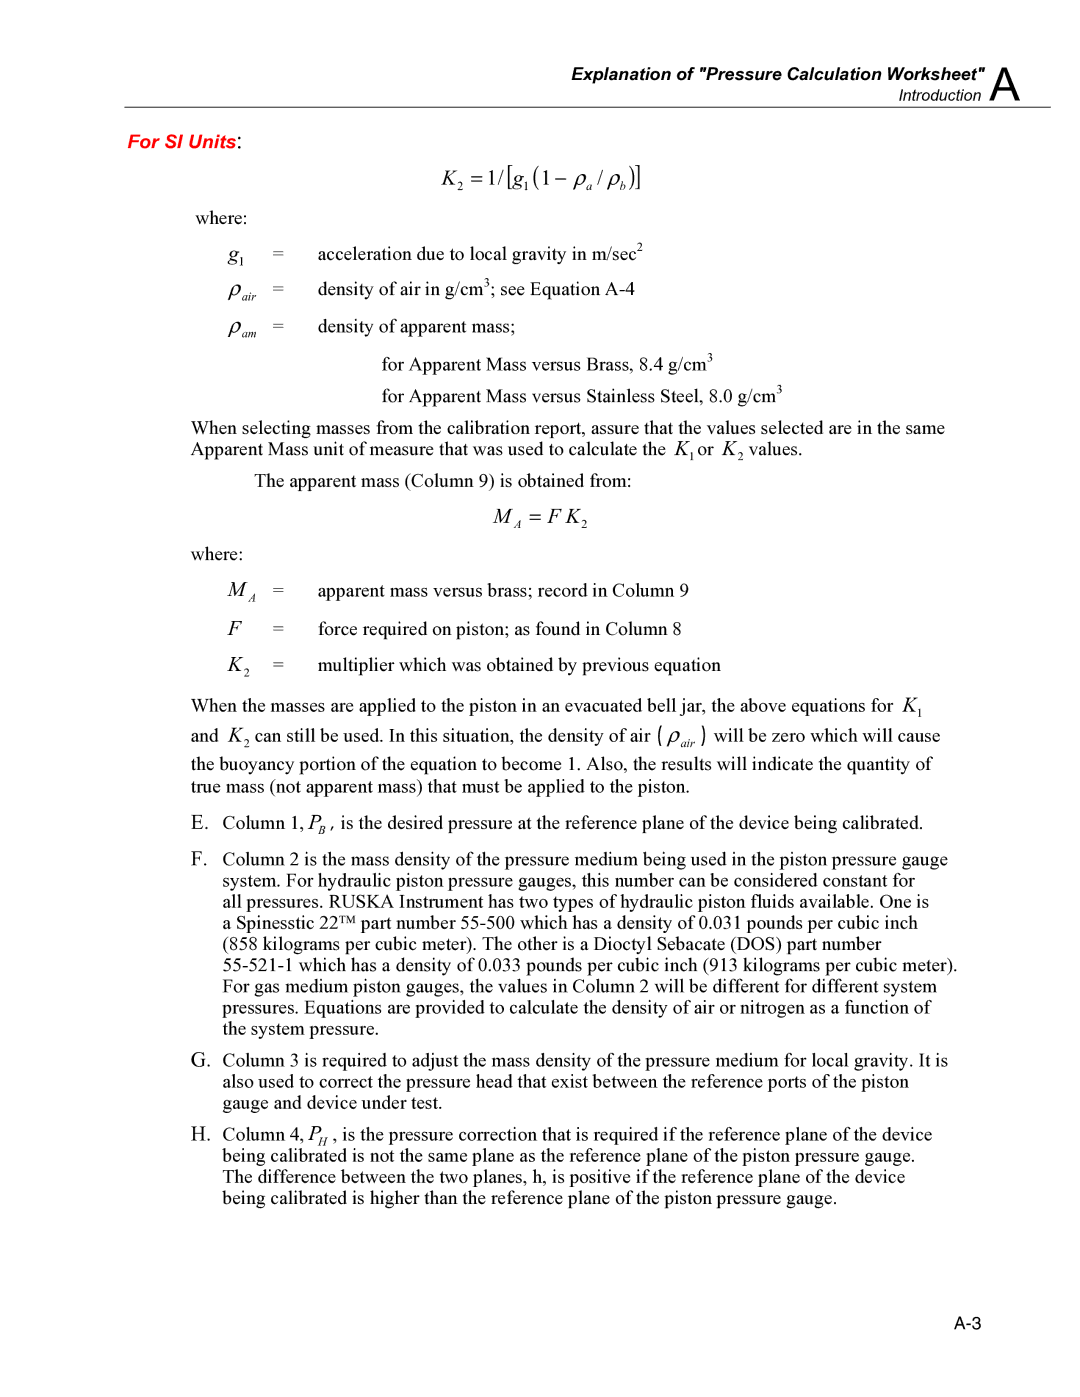 Fluke 2470 specifications K2 = 1/ g1 1 − ρa / ρb, For SI Units 